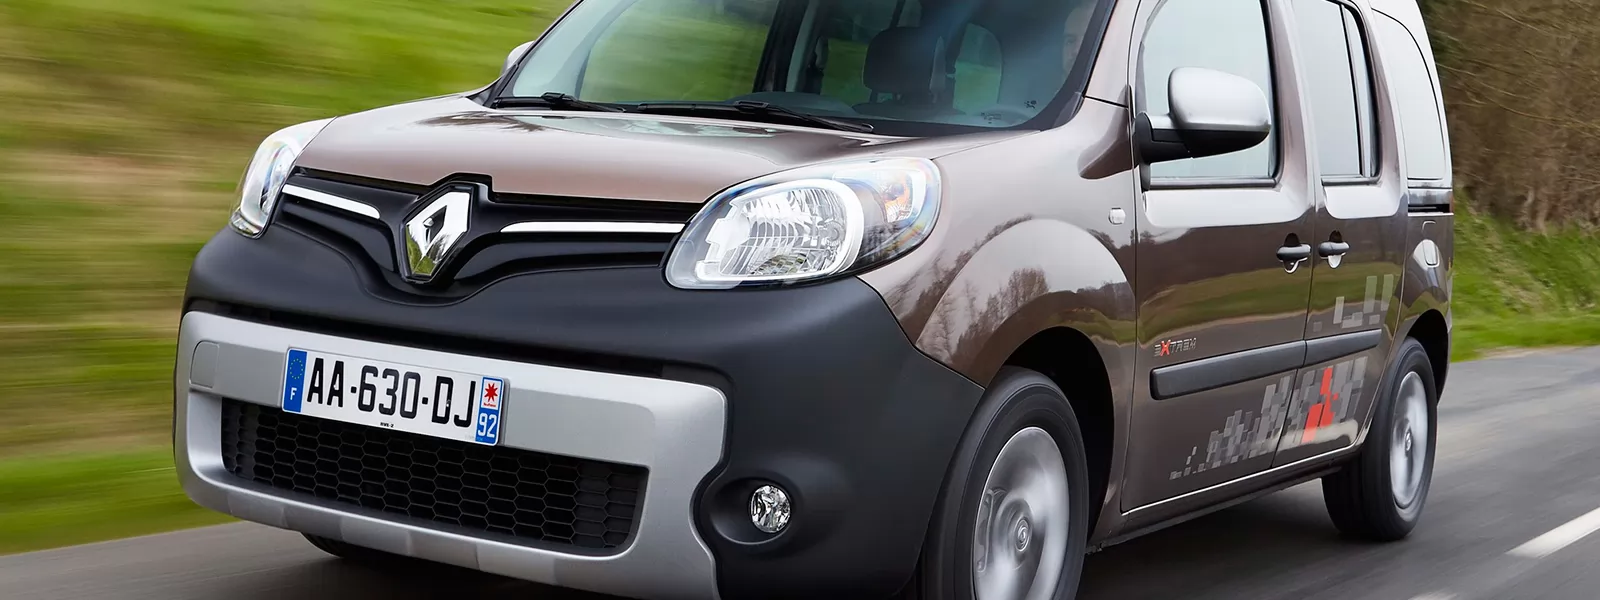 Renault Kangoo — описание модели